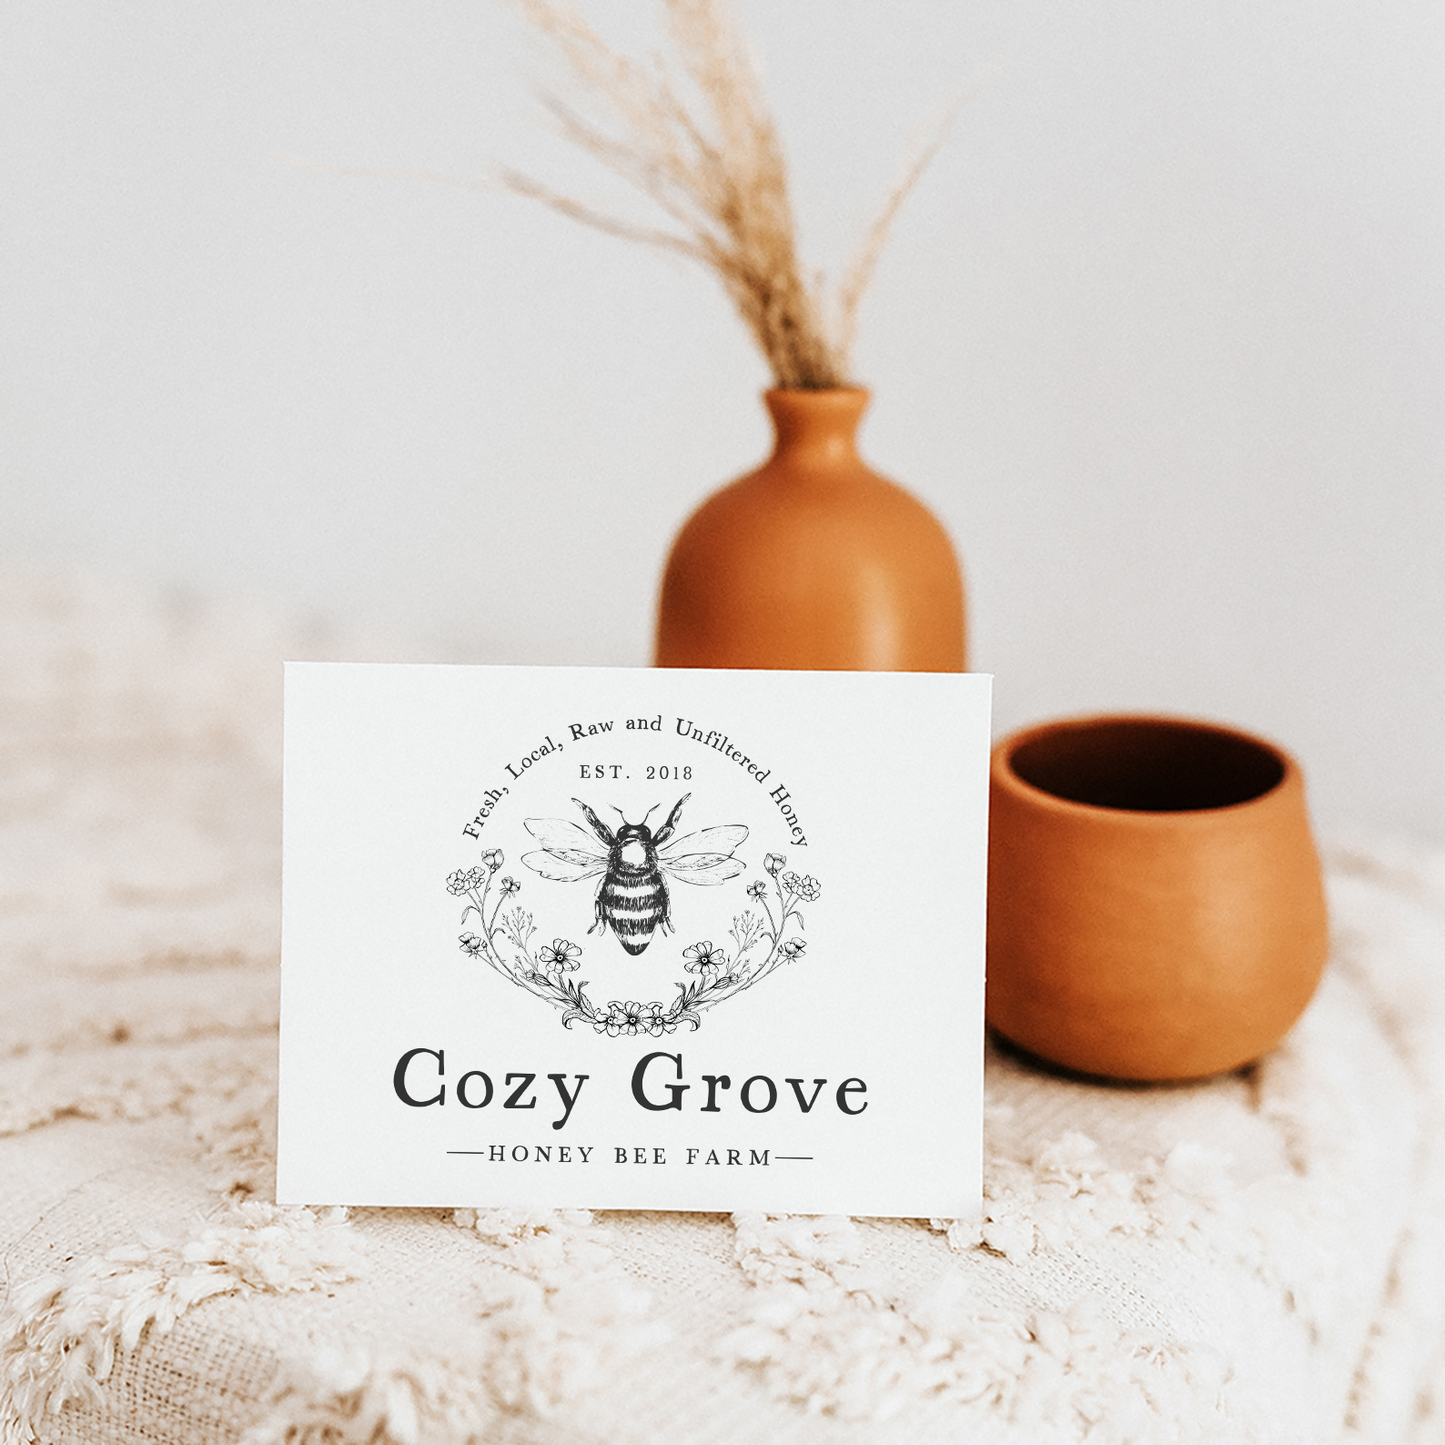 Cozy Grove | Premade Logo Design | Bee, Fine Art, Honey, Floral, Rustic, Nature, Farmhouse